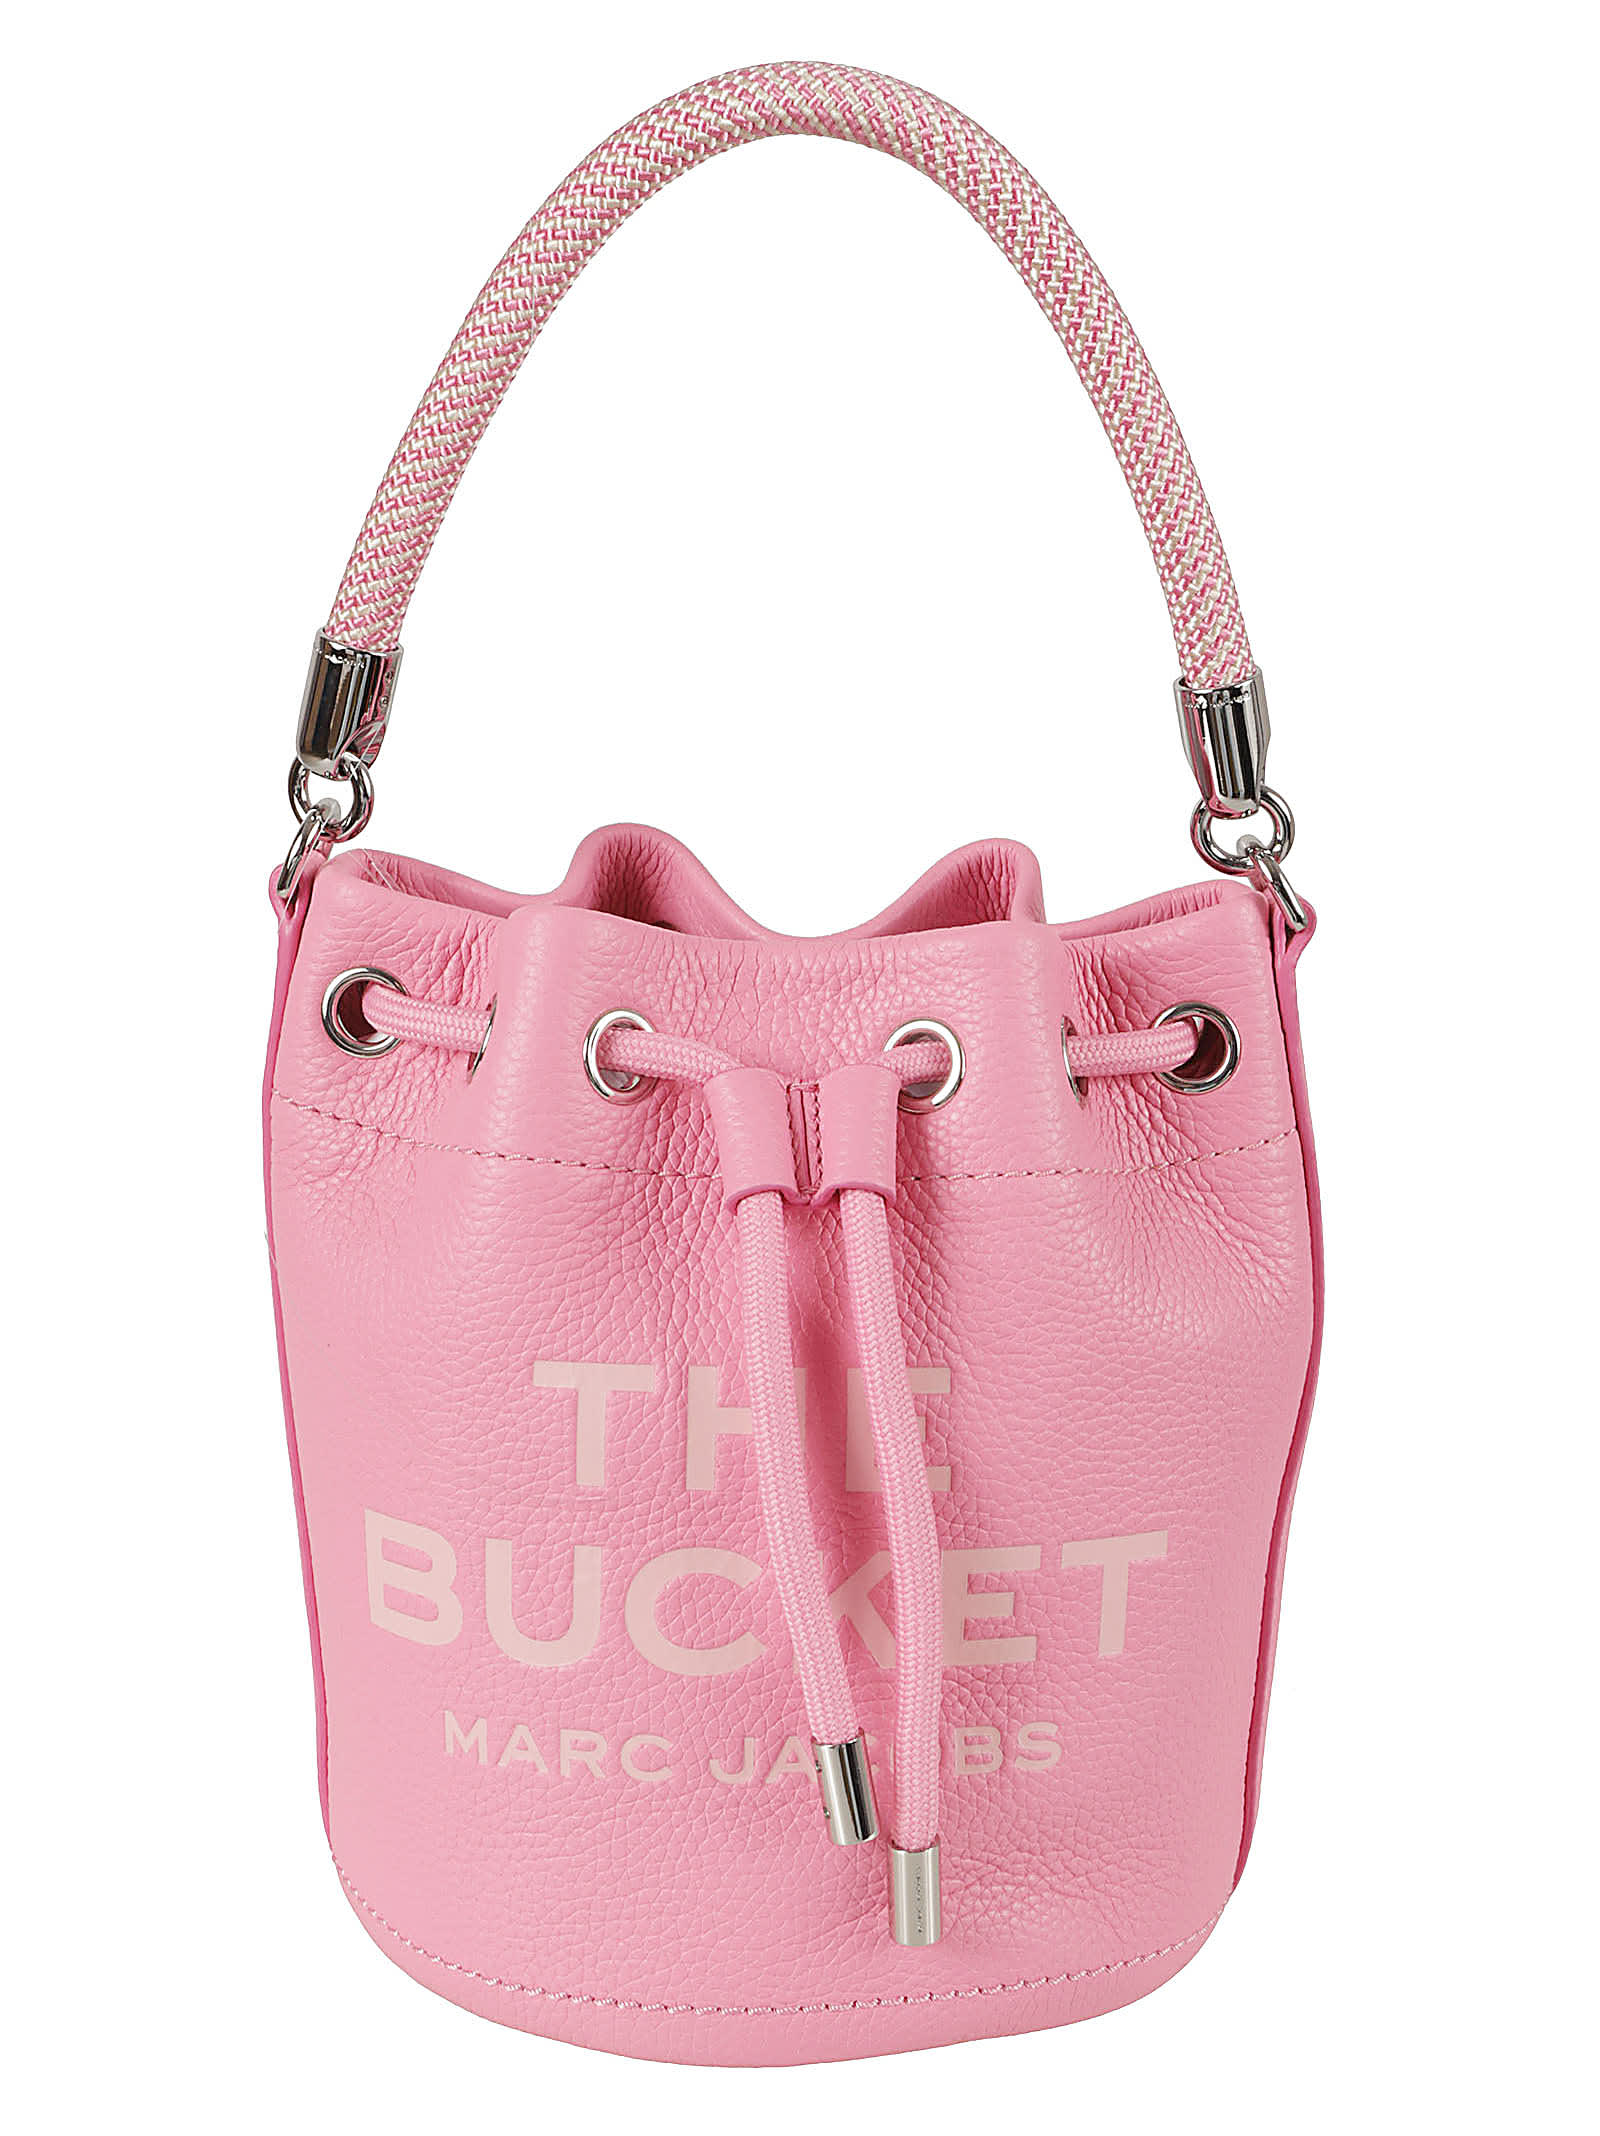 Marc Jacobs The Bucket Bag In Petal Pink